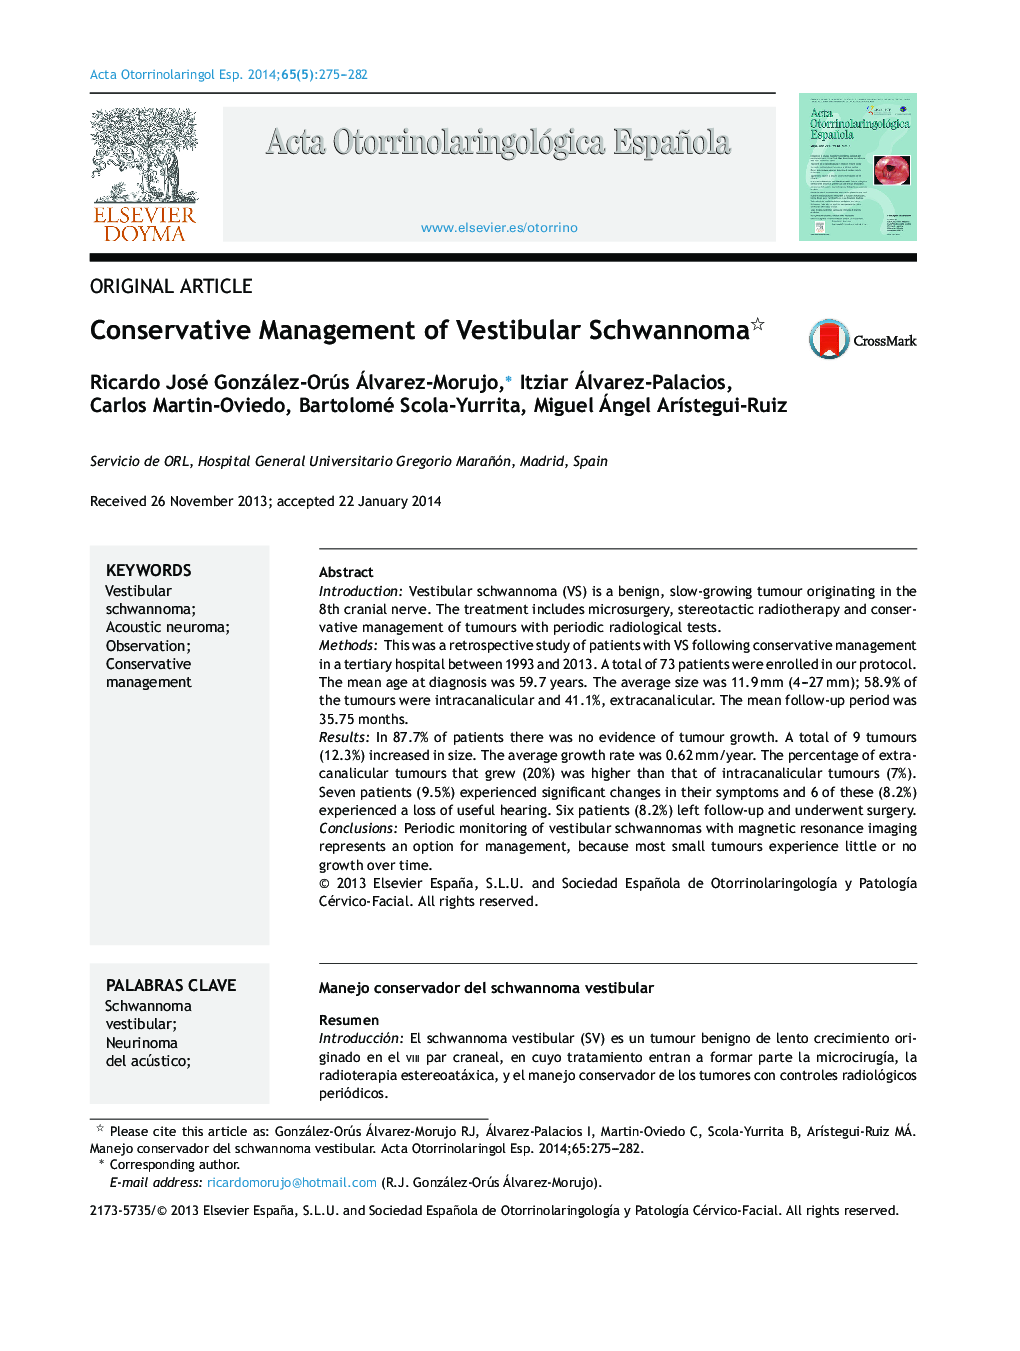 Conservative Management of Vestibular Schwannoma 